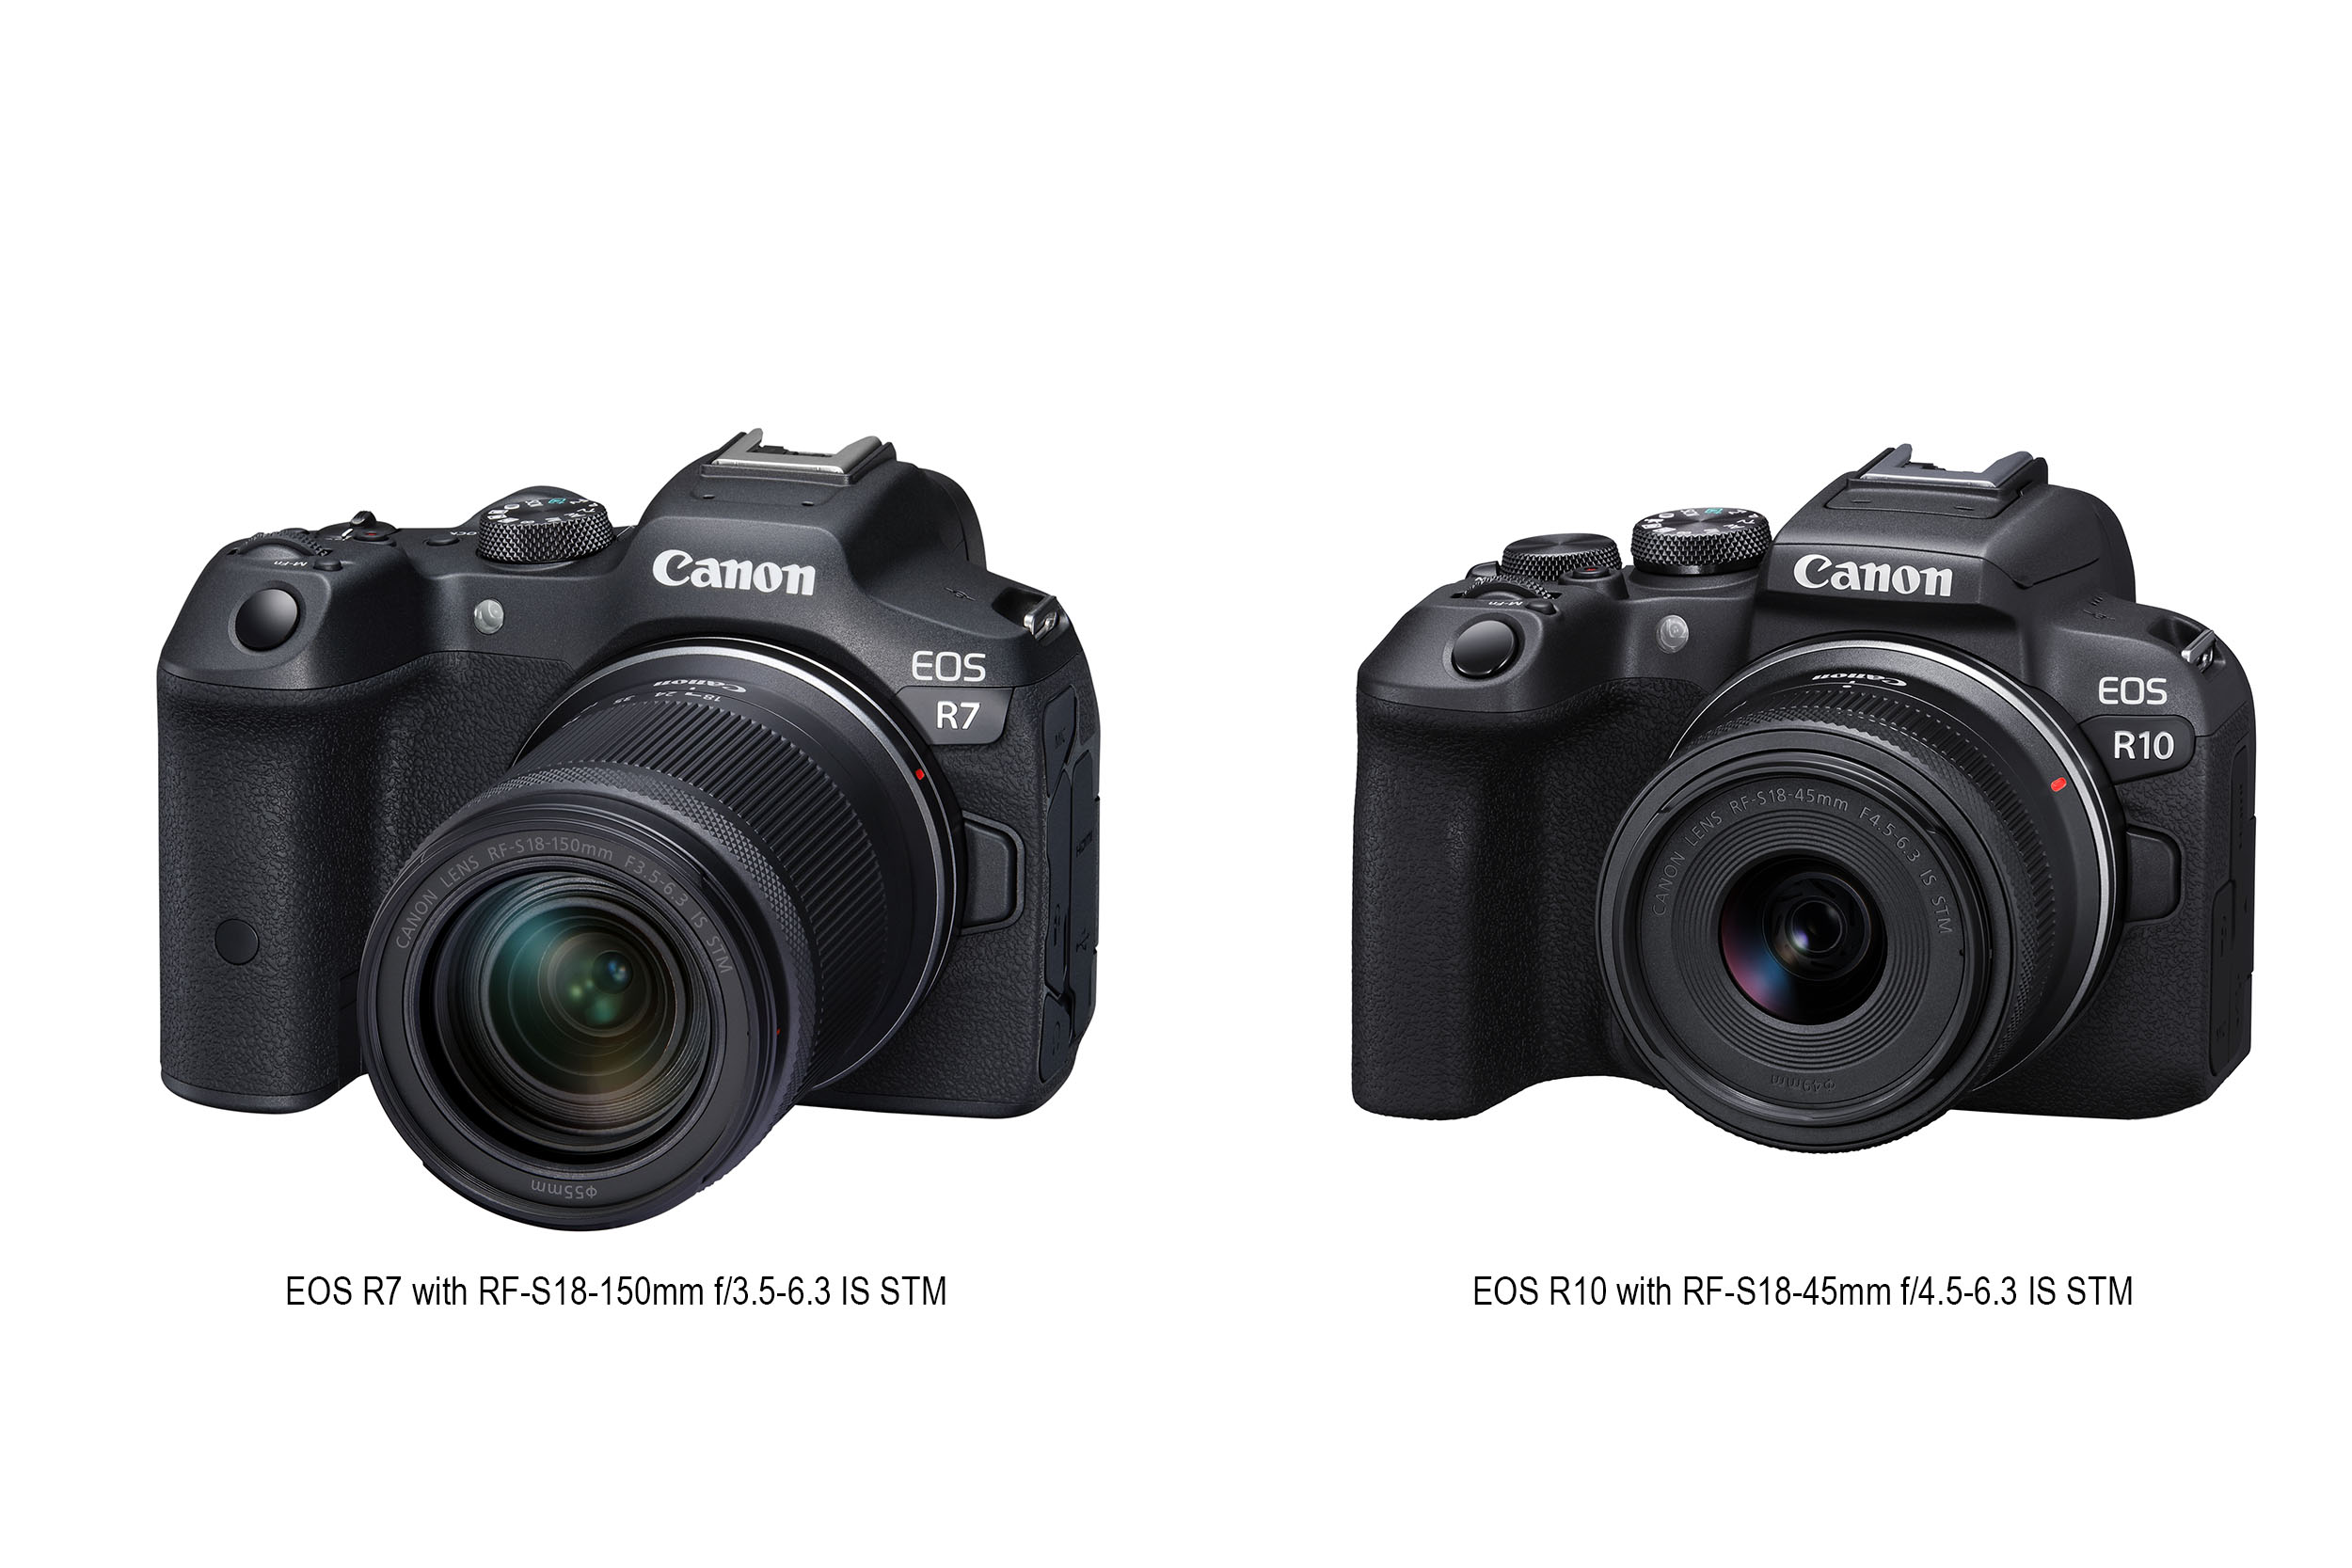 Kamera mirrorless EOS R7 (kiri) dan EOS R10 (kanan). (Sumber gambar: Canon Indonesia)